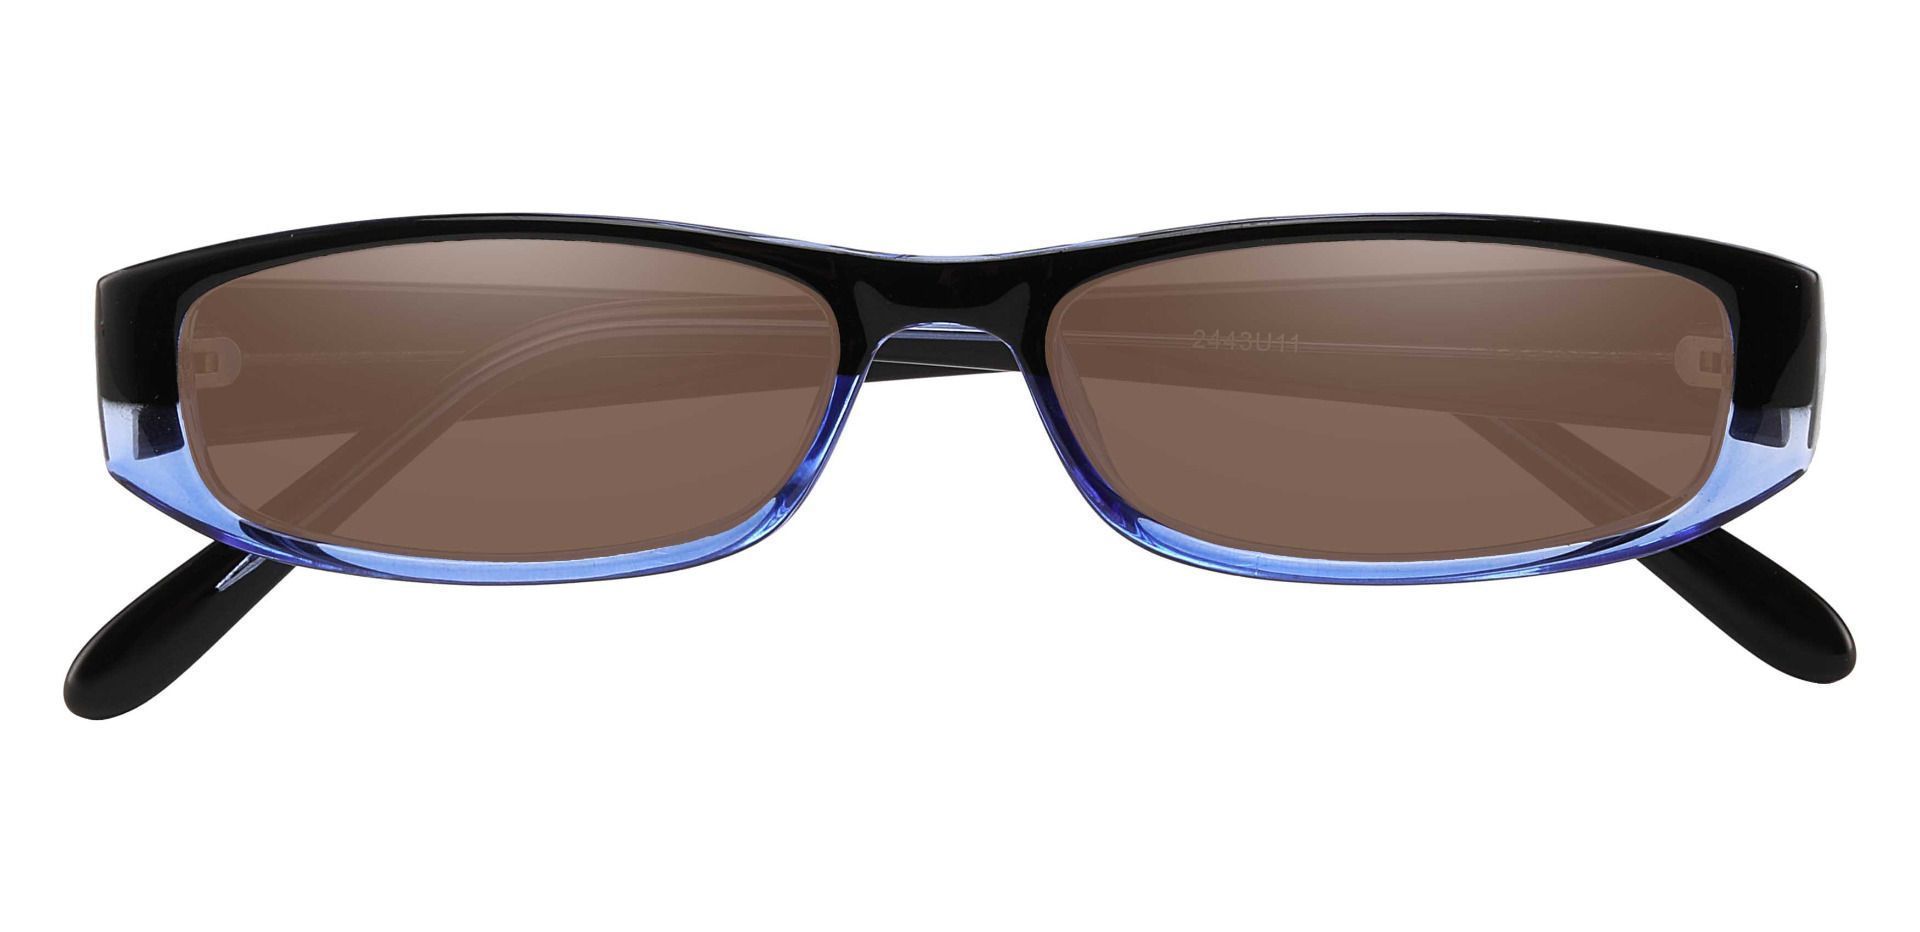 Elgin Rectangle Single Vision Sunglasses - Blue Frame With Brown Lenses